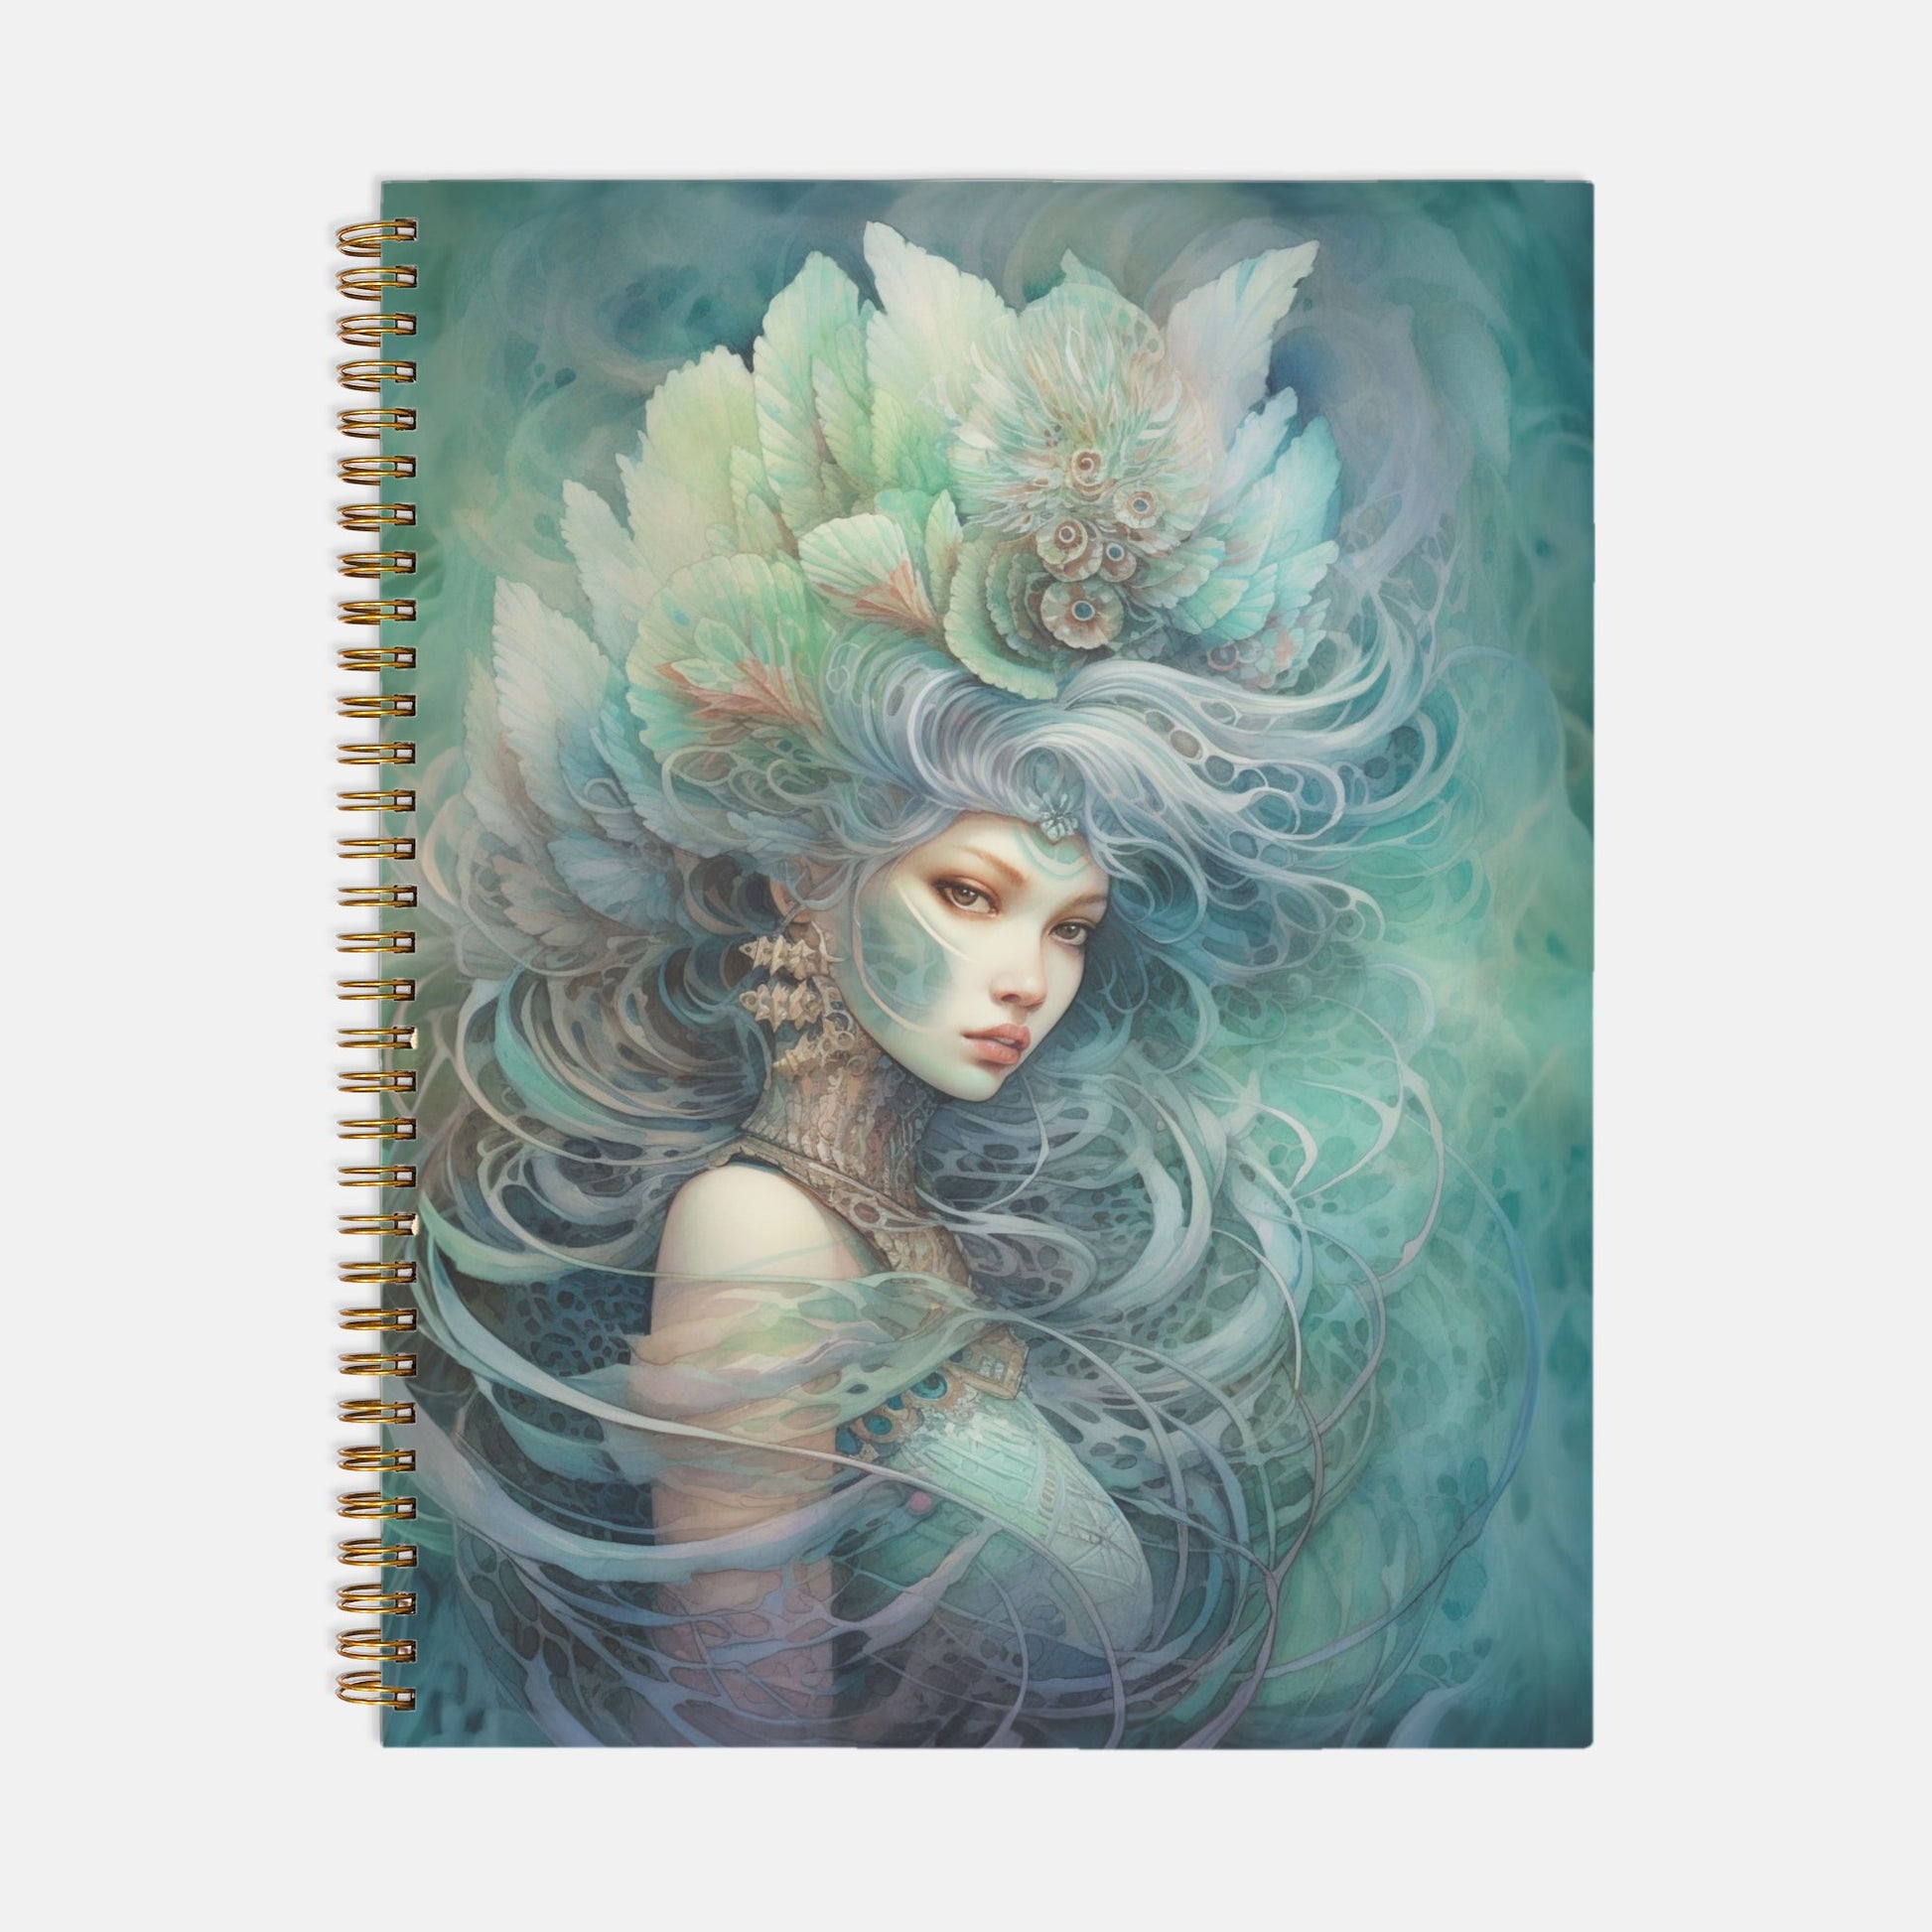 Mermaid Queen Journal Notebook Hardcover Spiral 8.5 x 11